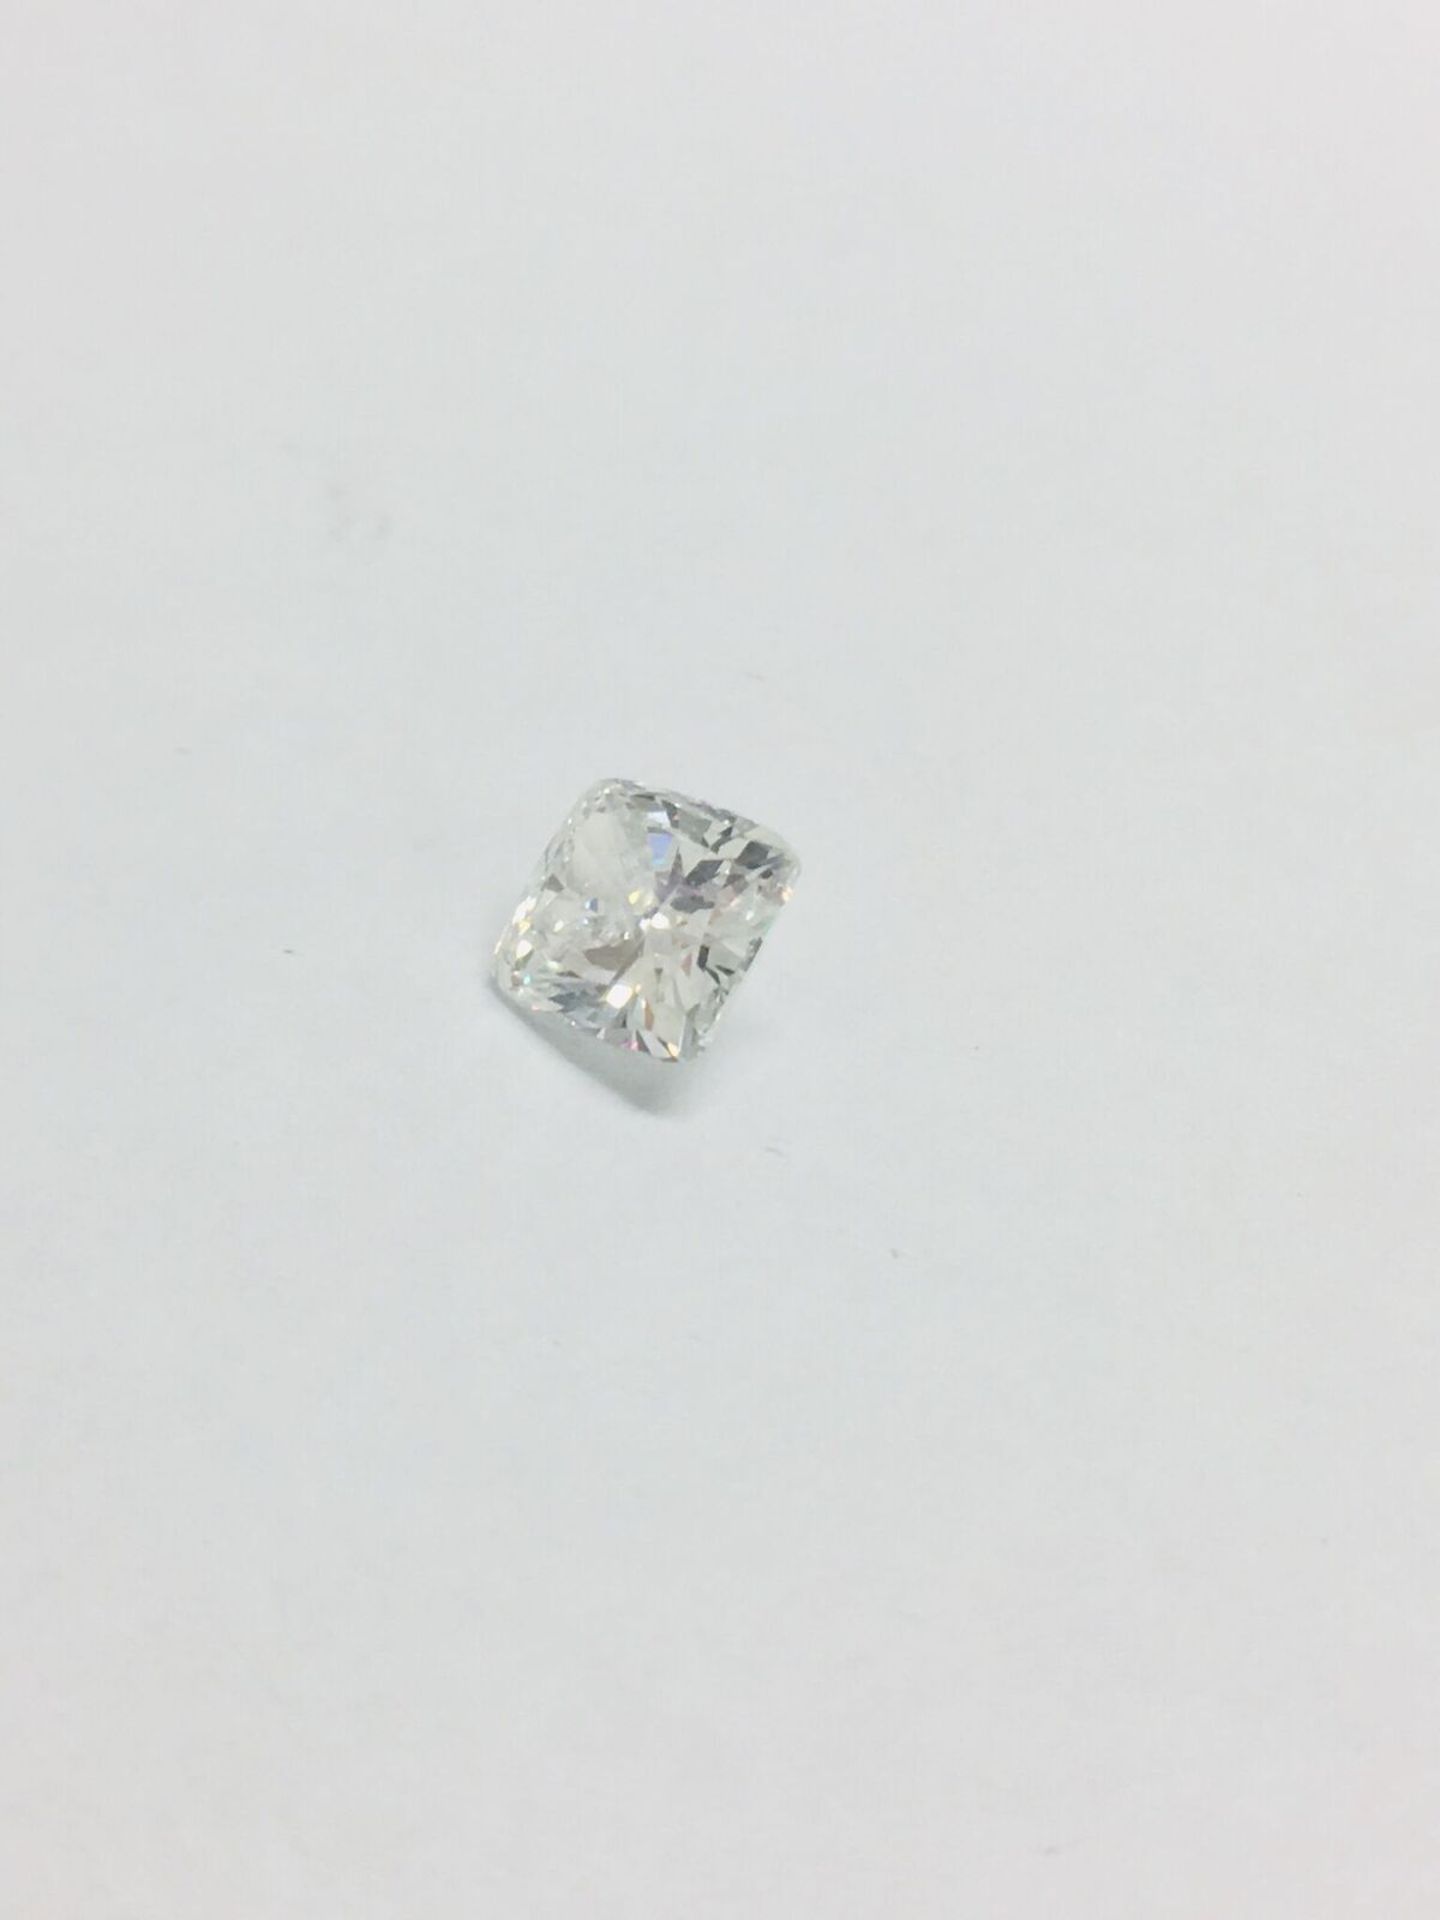 1.10ct Radiant cut natural Diamond - Image 2 of 3